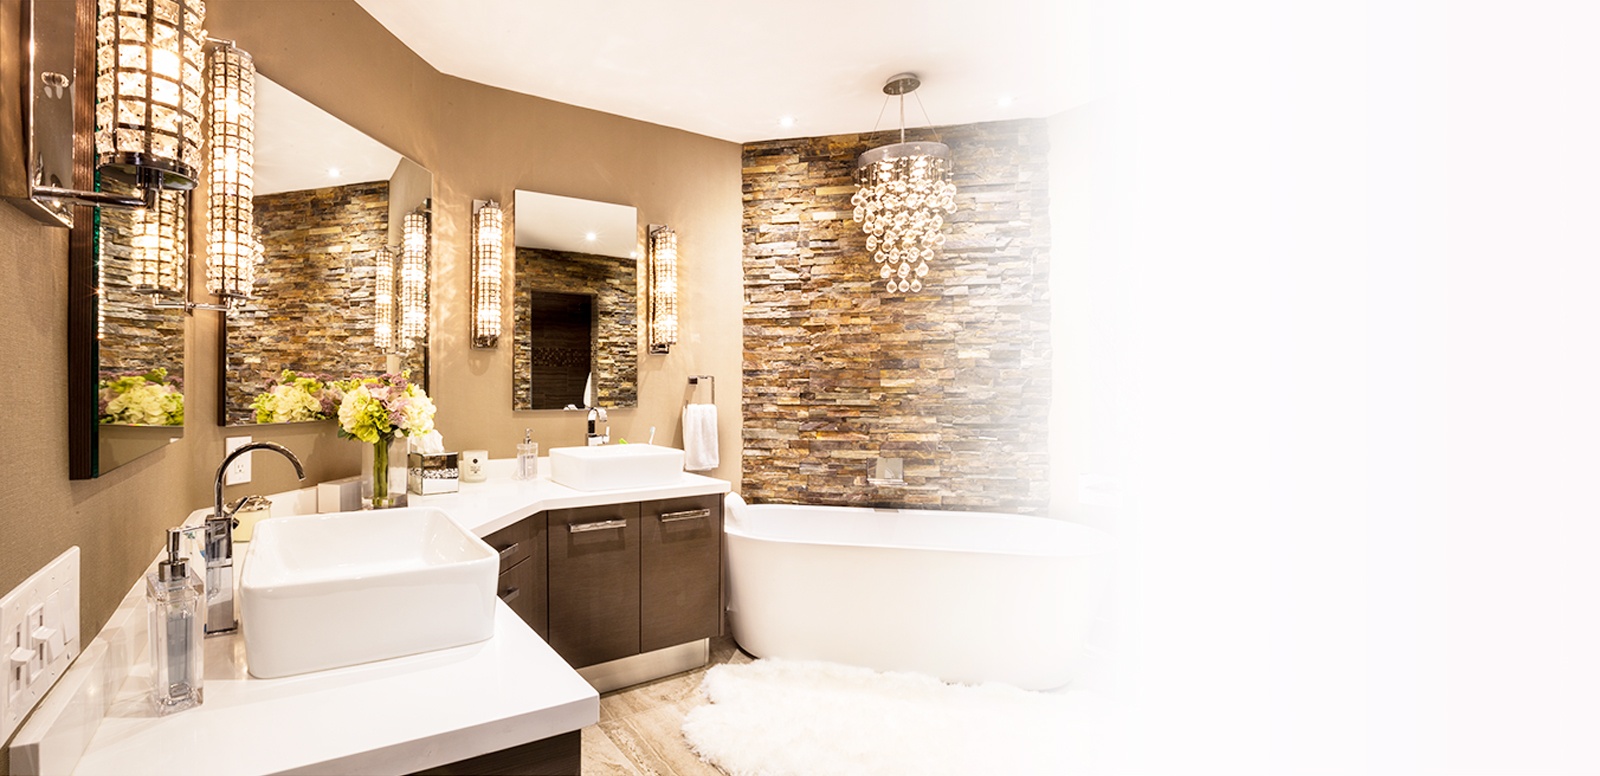 Custom Bathroom Design and Remodeling Firm in Davie, Florida - Andrea Duran Interiors